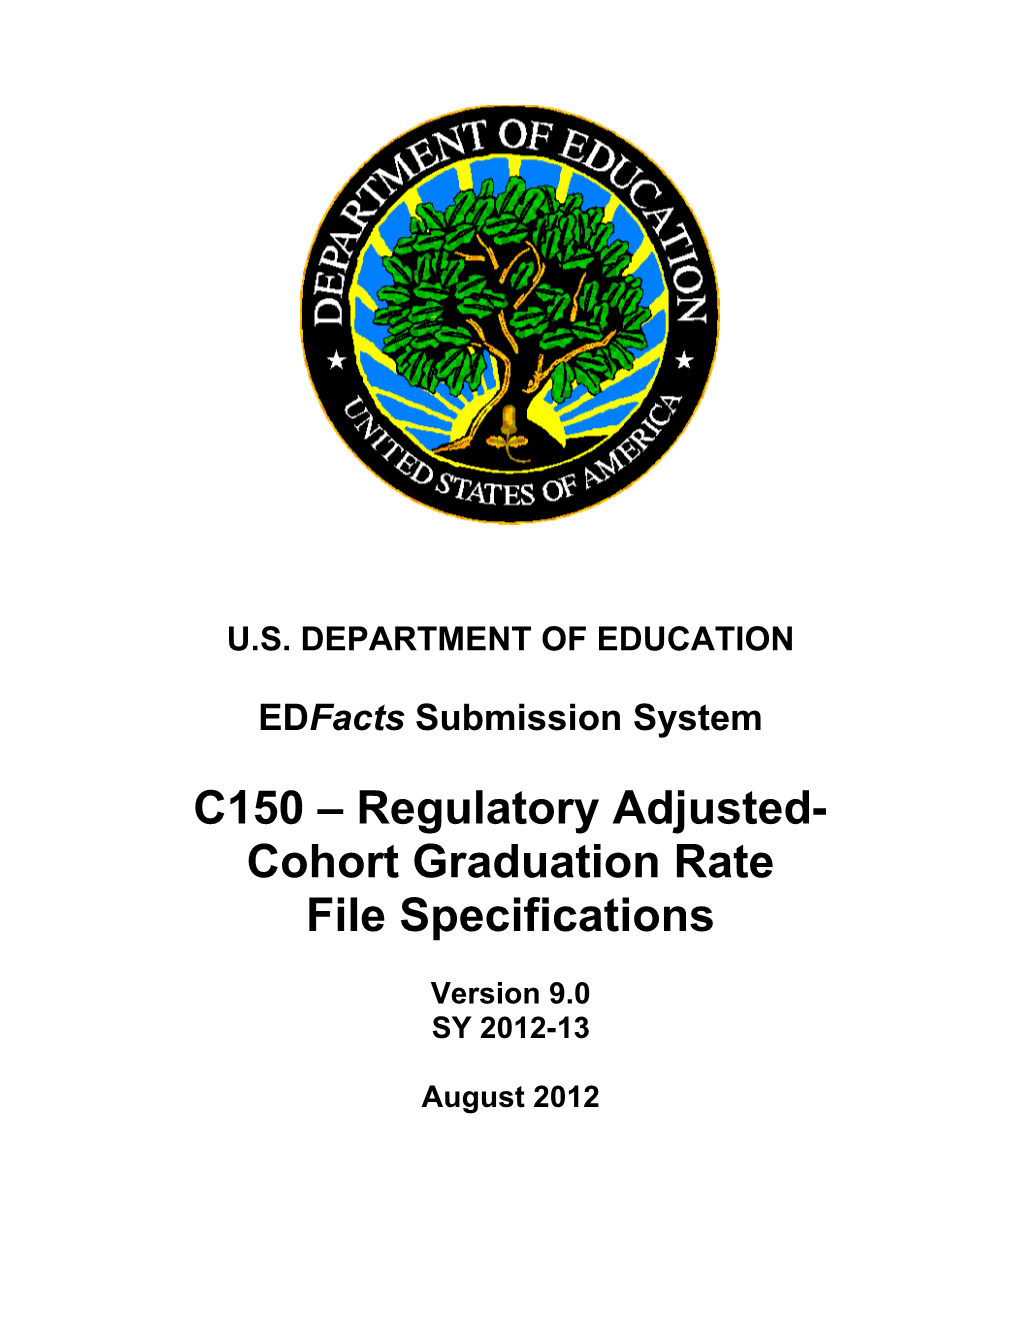 Regulatory Adjusted-Cohort Graduation Rate File Specification